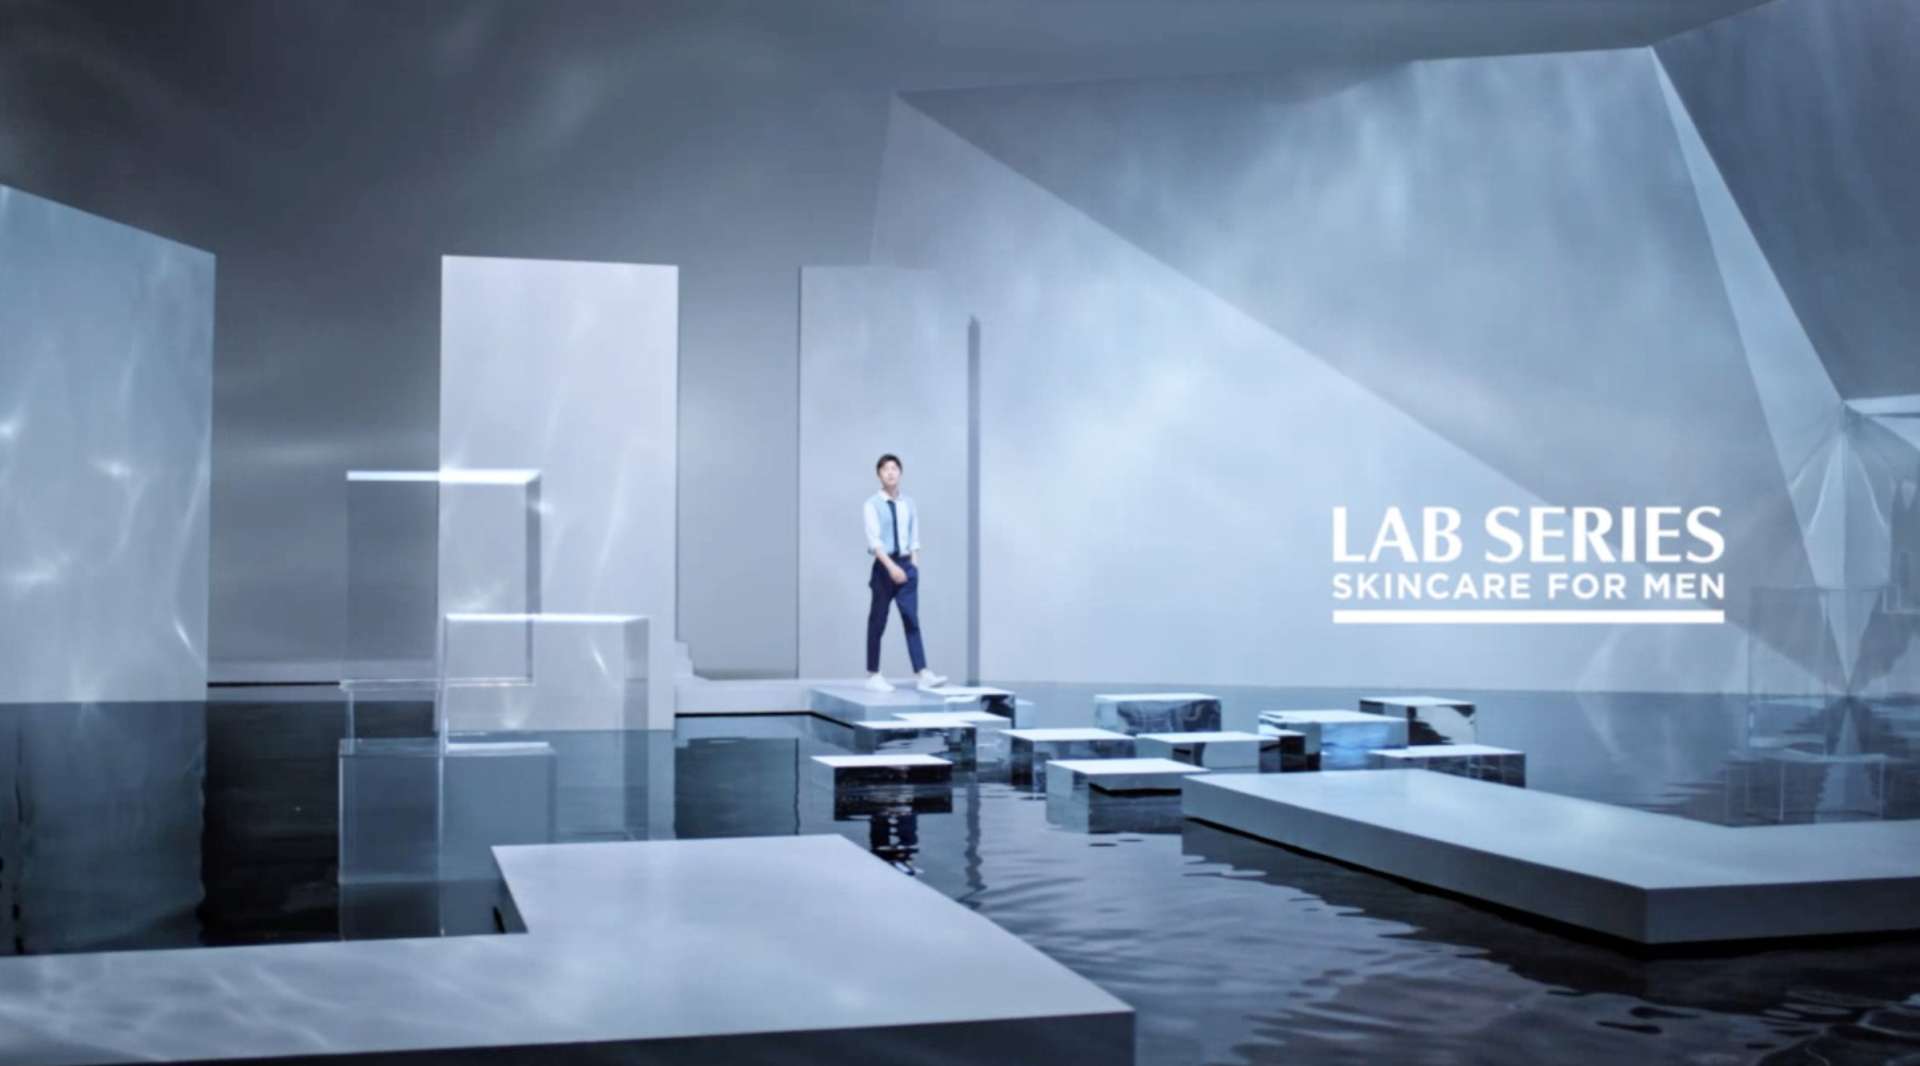 lab series白敬亭 蓝宝瓶篇